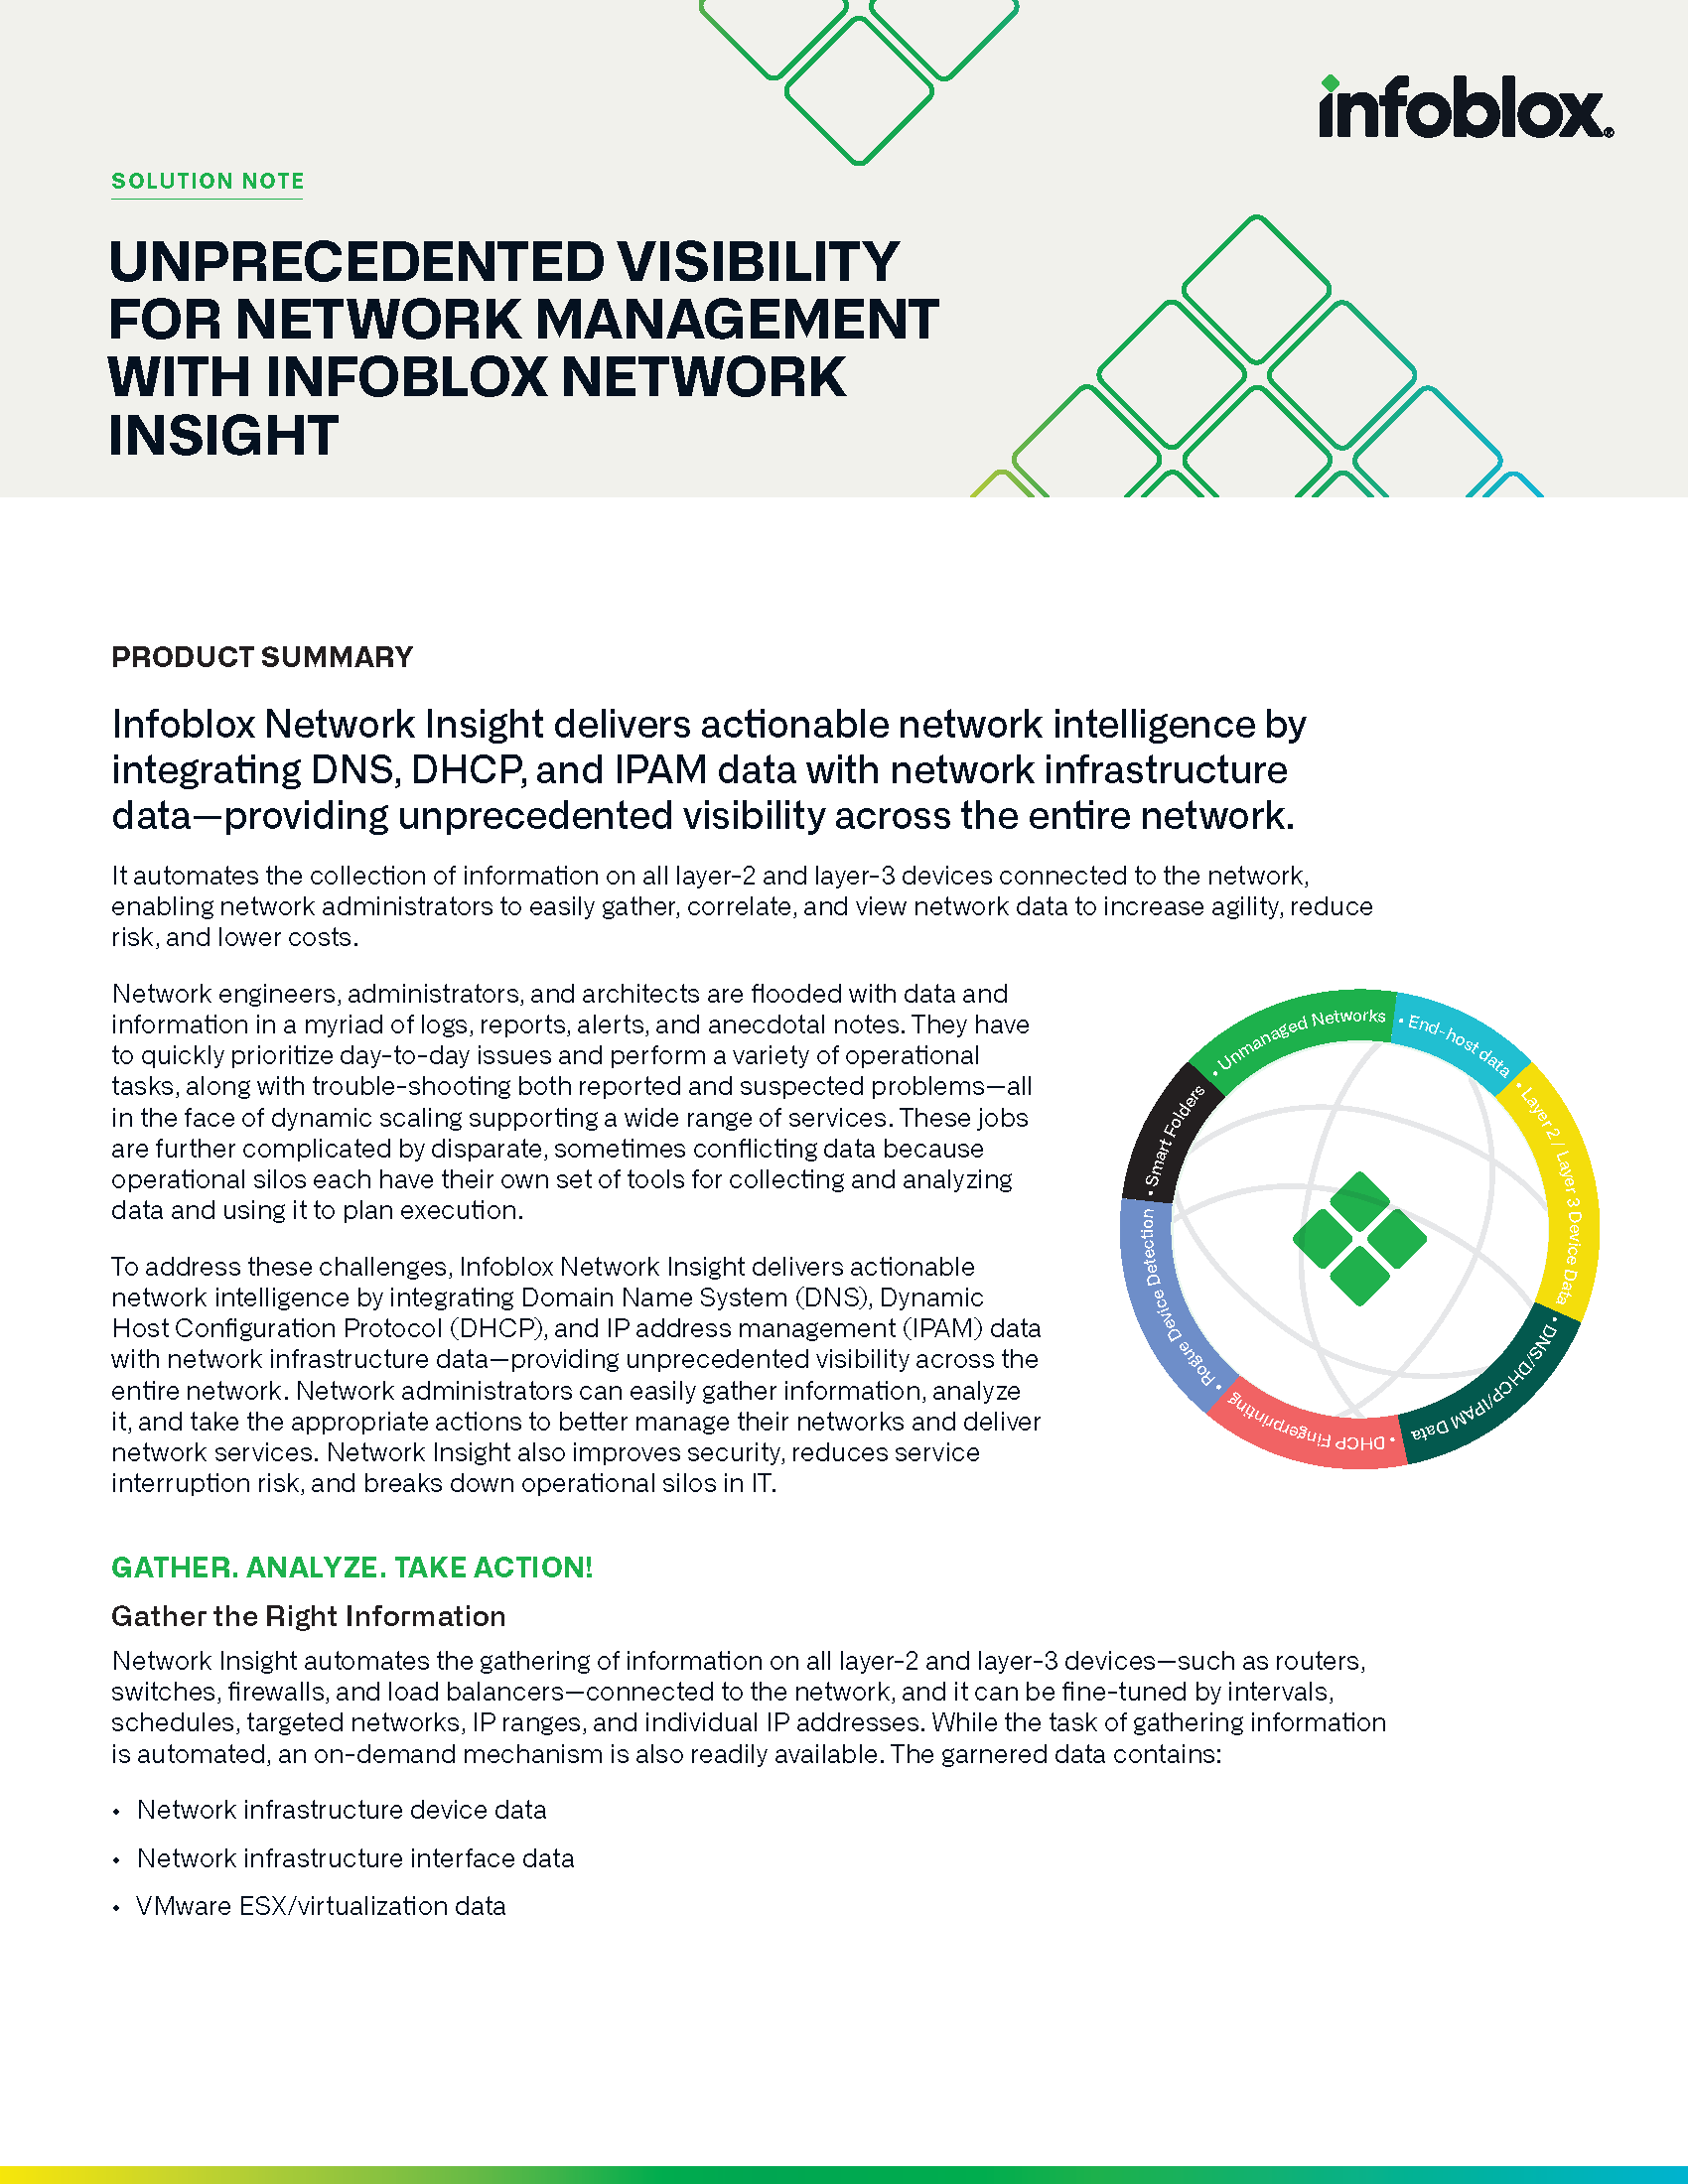 
Unprecedented Visibility for Network Management